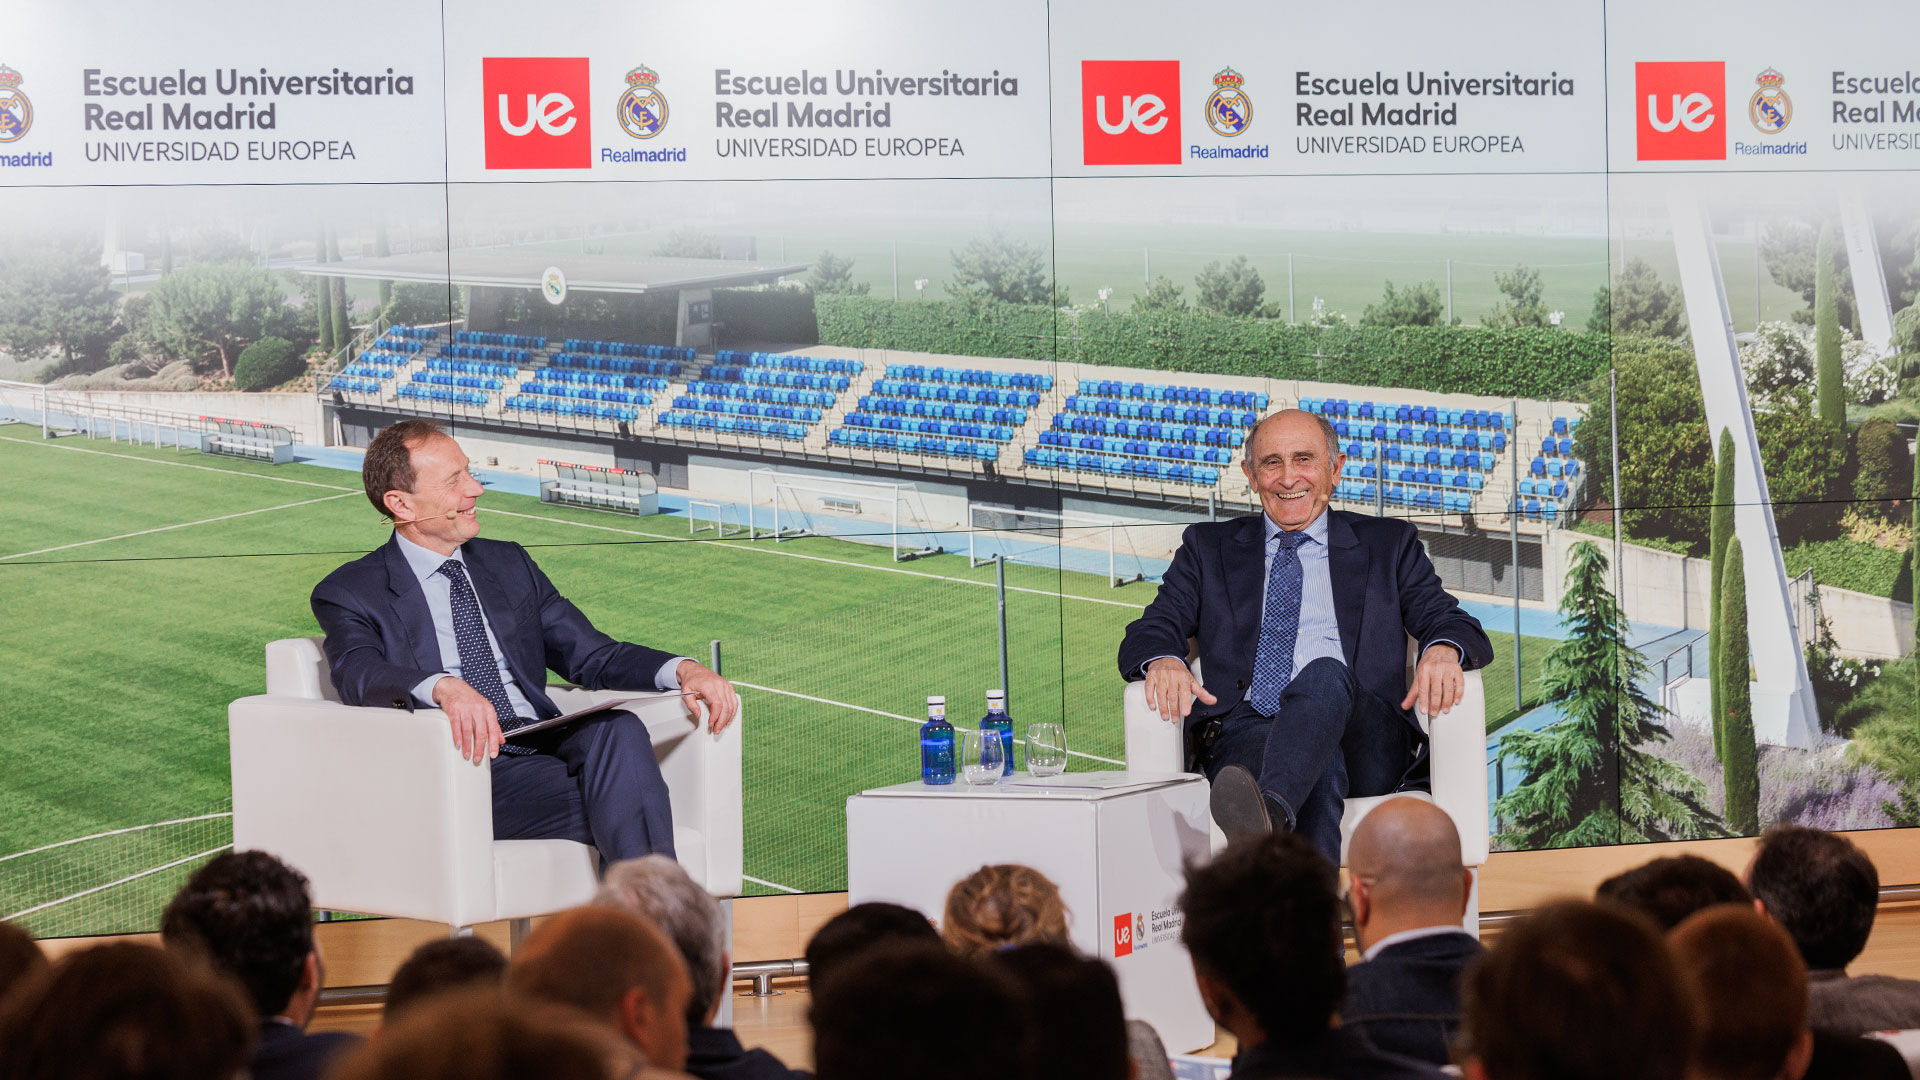 José Martínez ‘Pirri’, honorary Real Madrid club president, closes Semana Blanca (White Week)